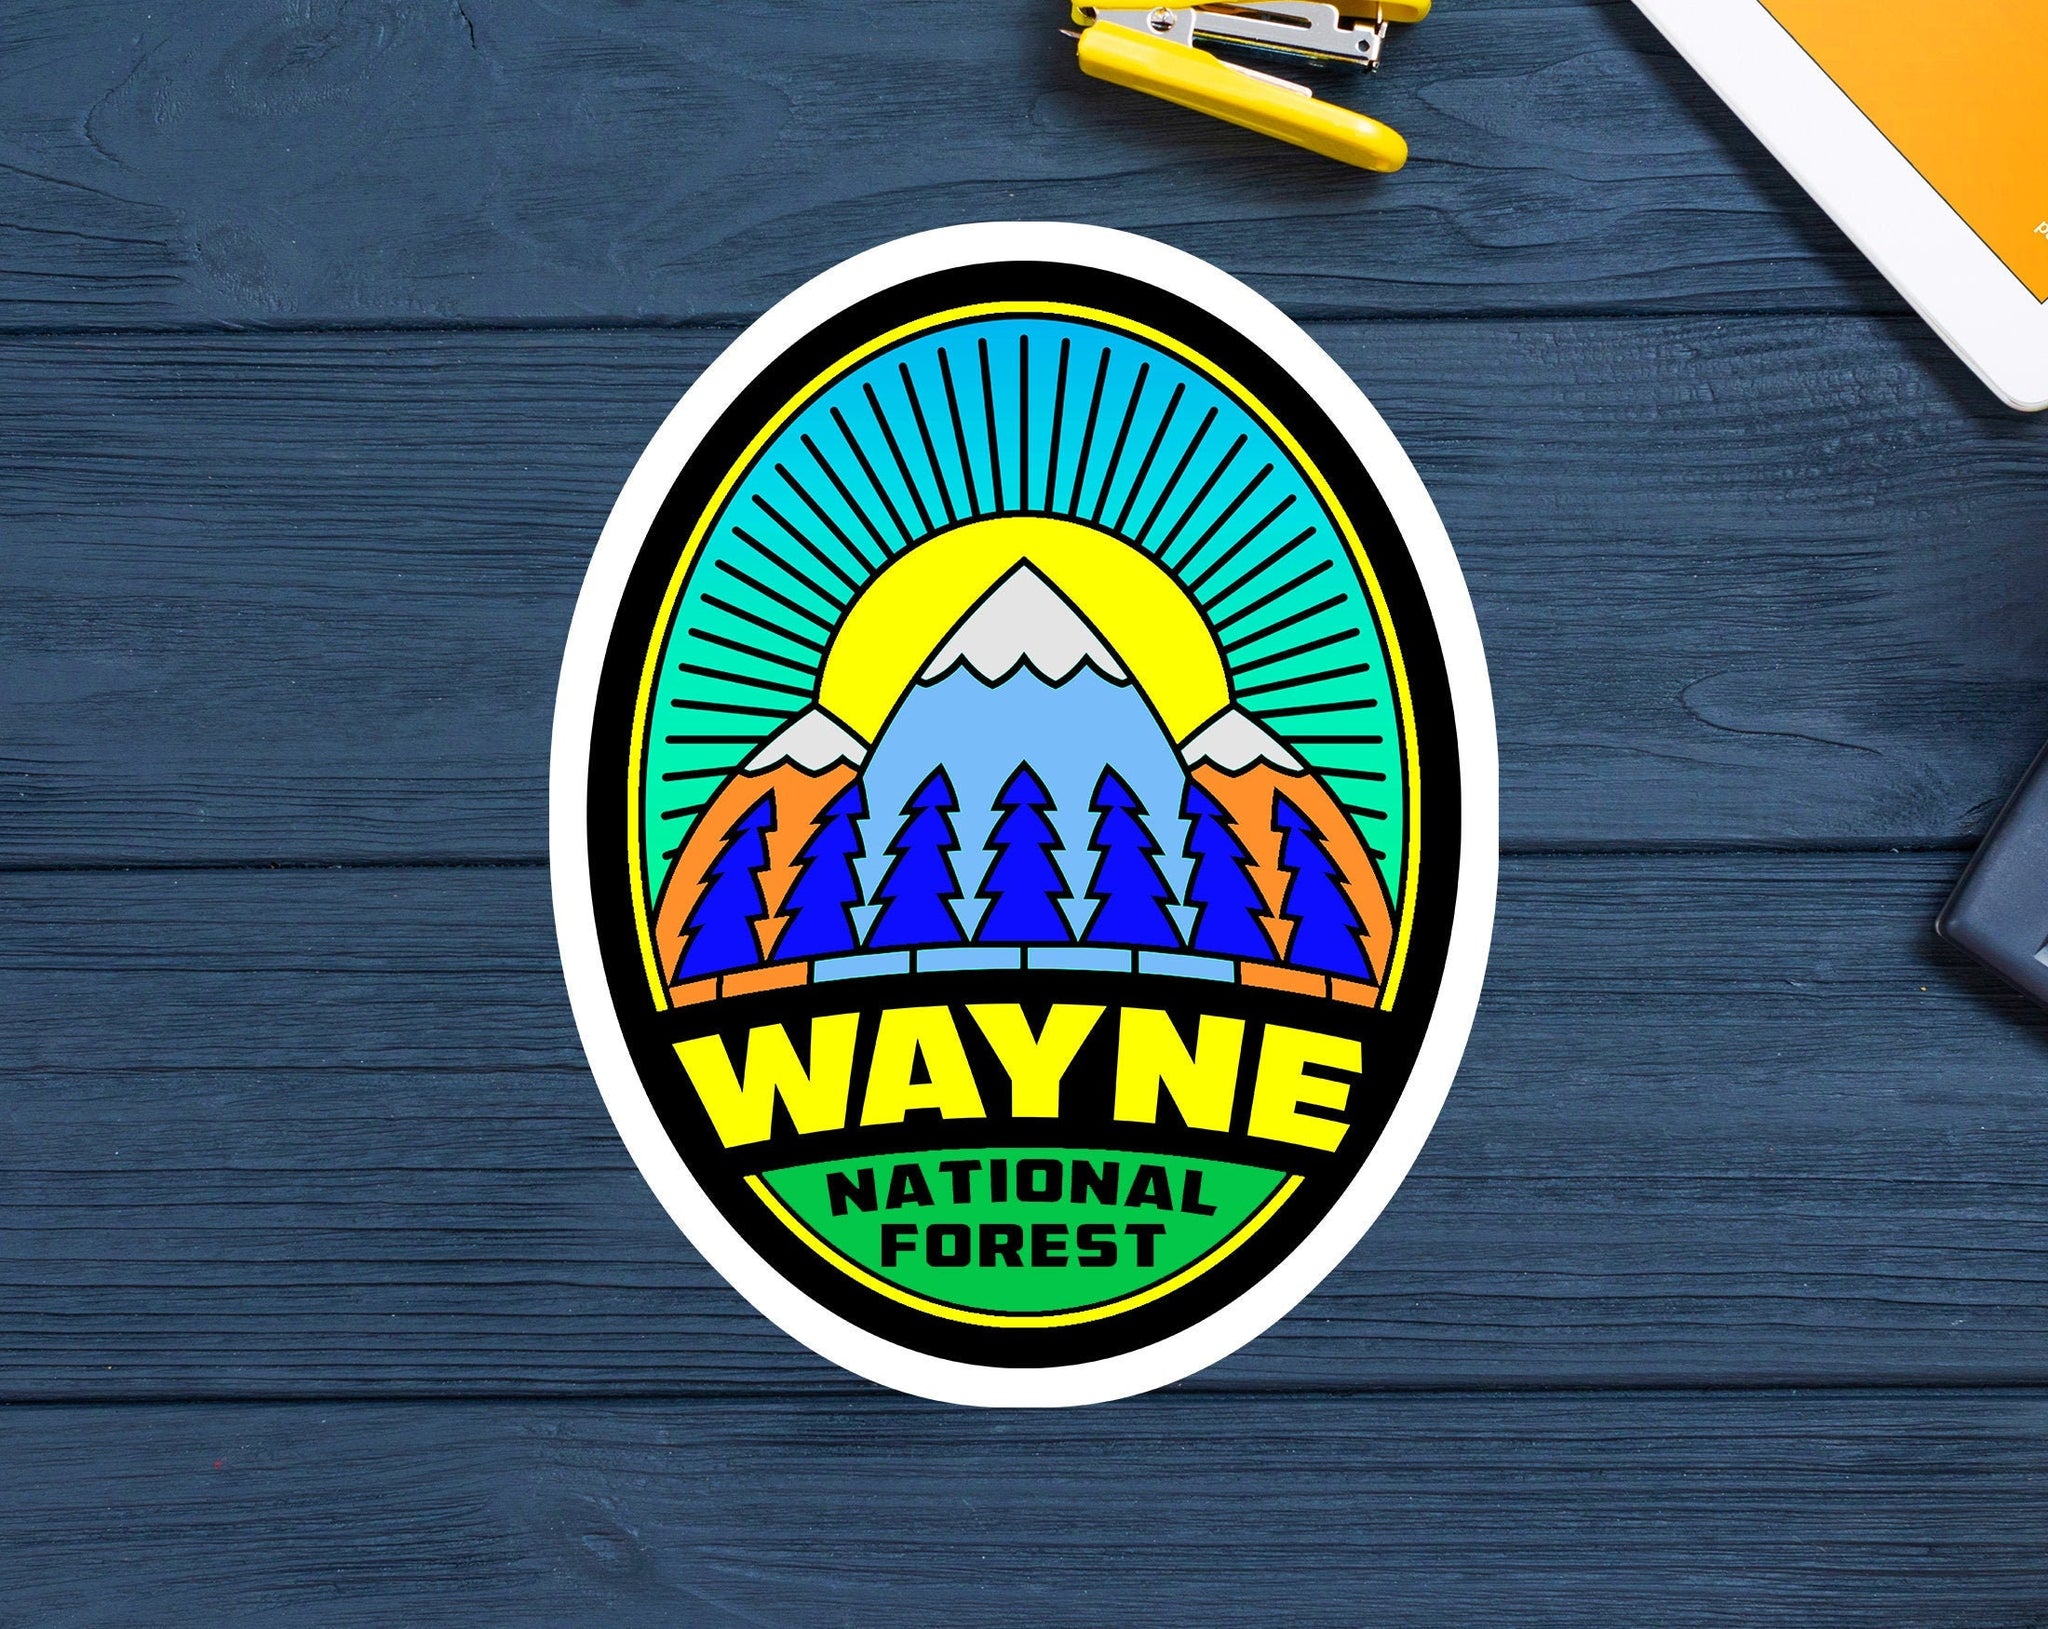 Wayne National Forest Decal Sticker 2.75" x 3.5" Ohio Vinyl